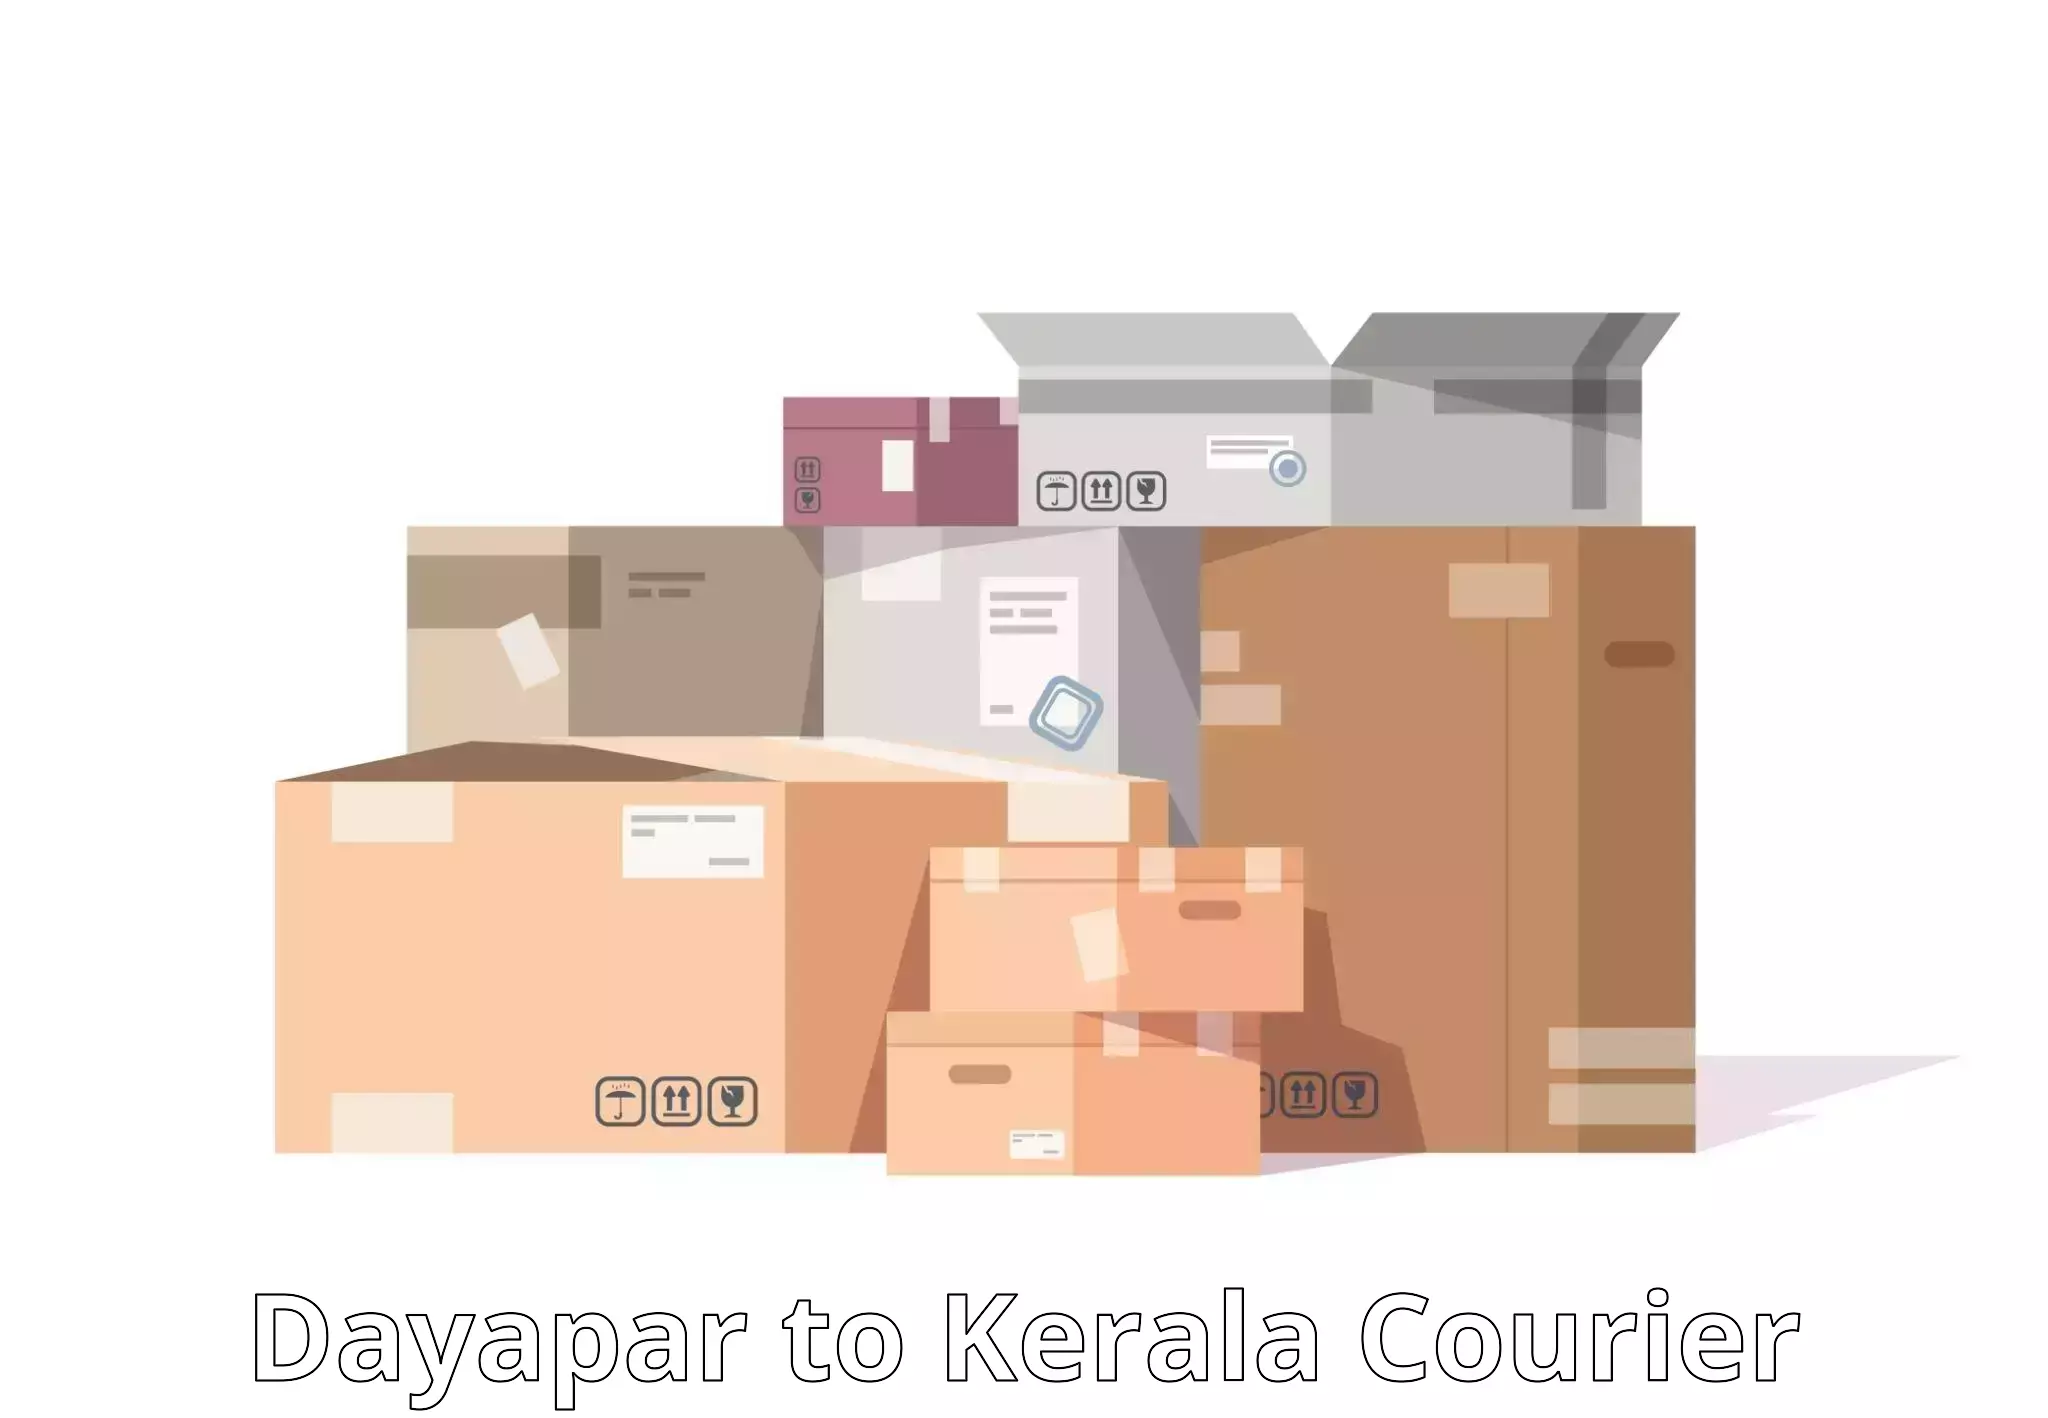 Courier service efficiency Dayapar to Cochin Port Kochi